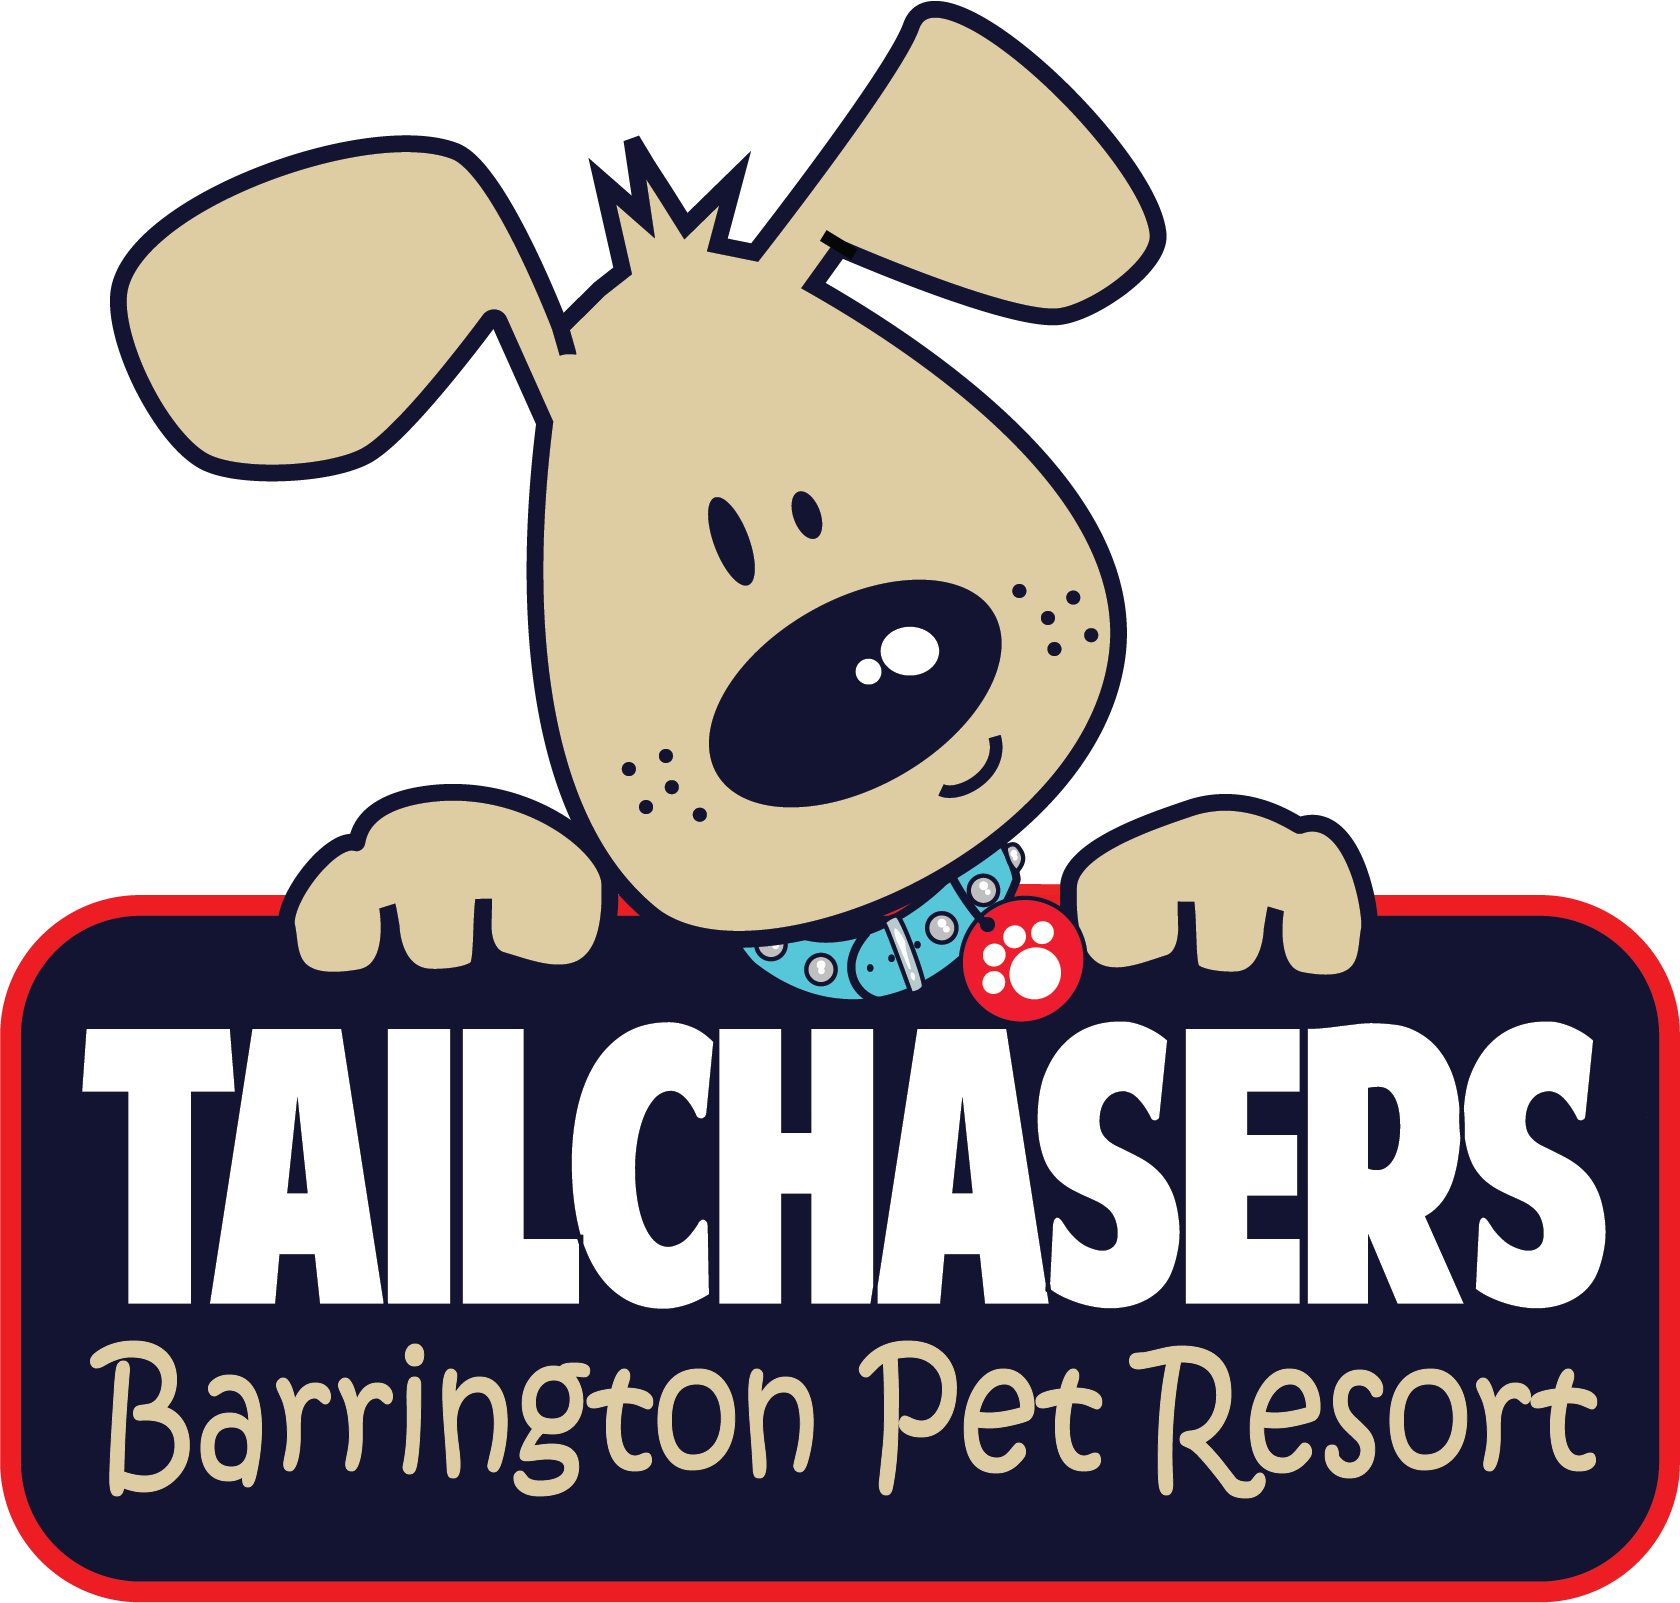 Tailchasers Barrington Pet Resort